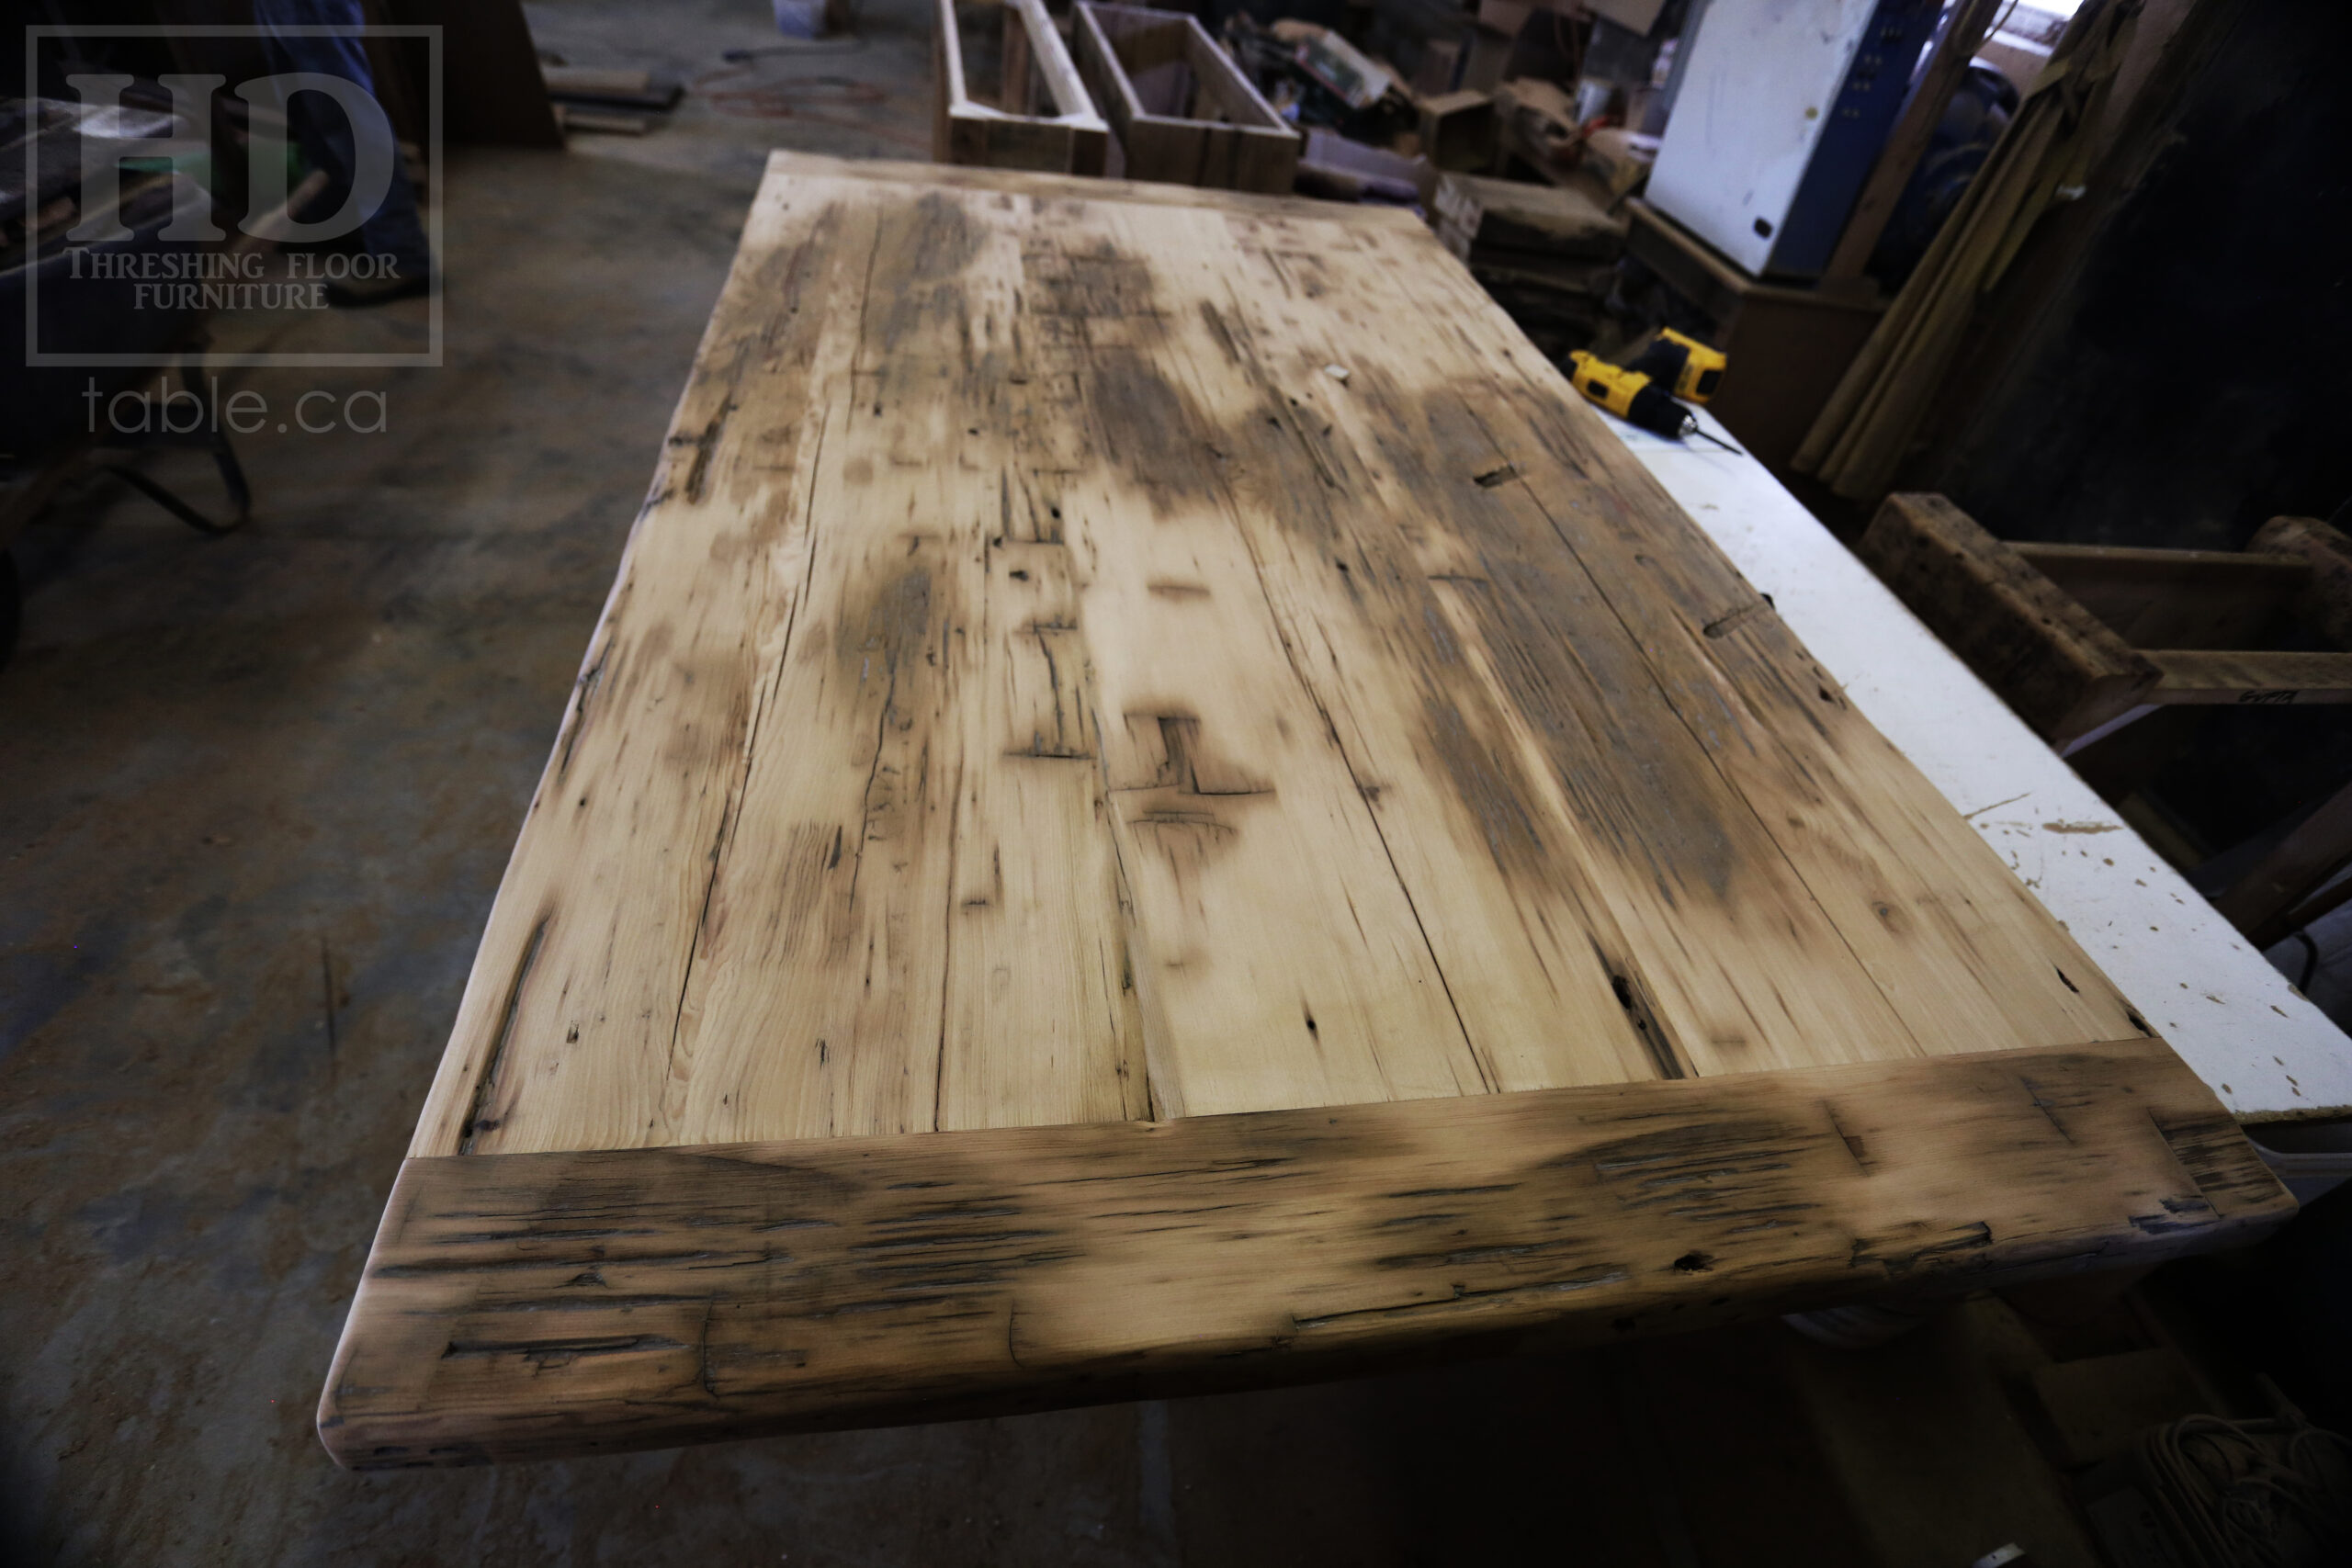 72” Ontario Barnwood Table Top – 42” wide – Old Growth Pine Hemlock Construction – Original edges & distressing maintained - Premium epoxy + satin polyurethane finish - www.table.ca